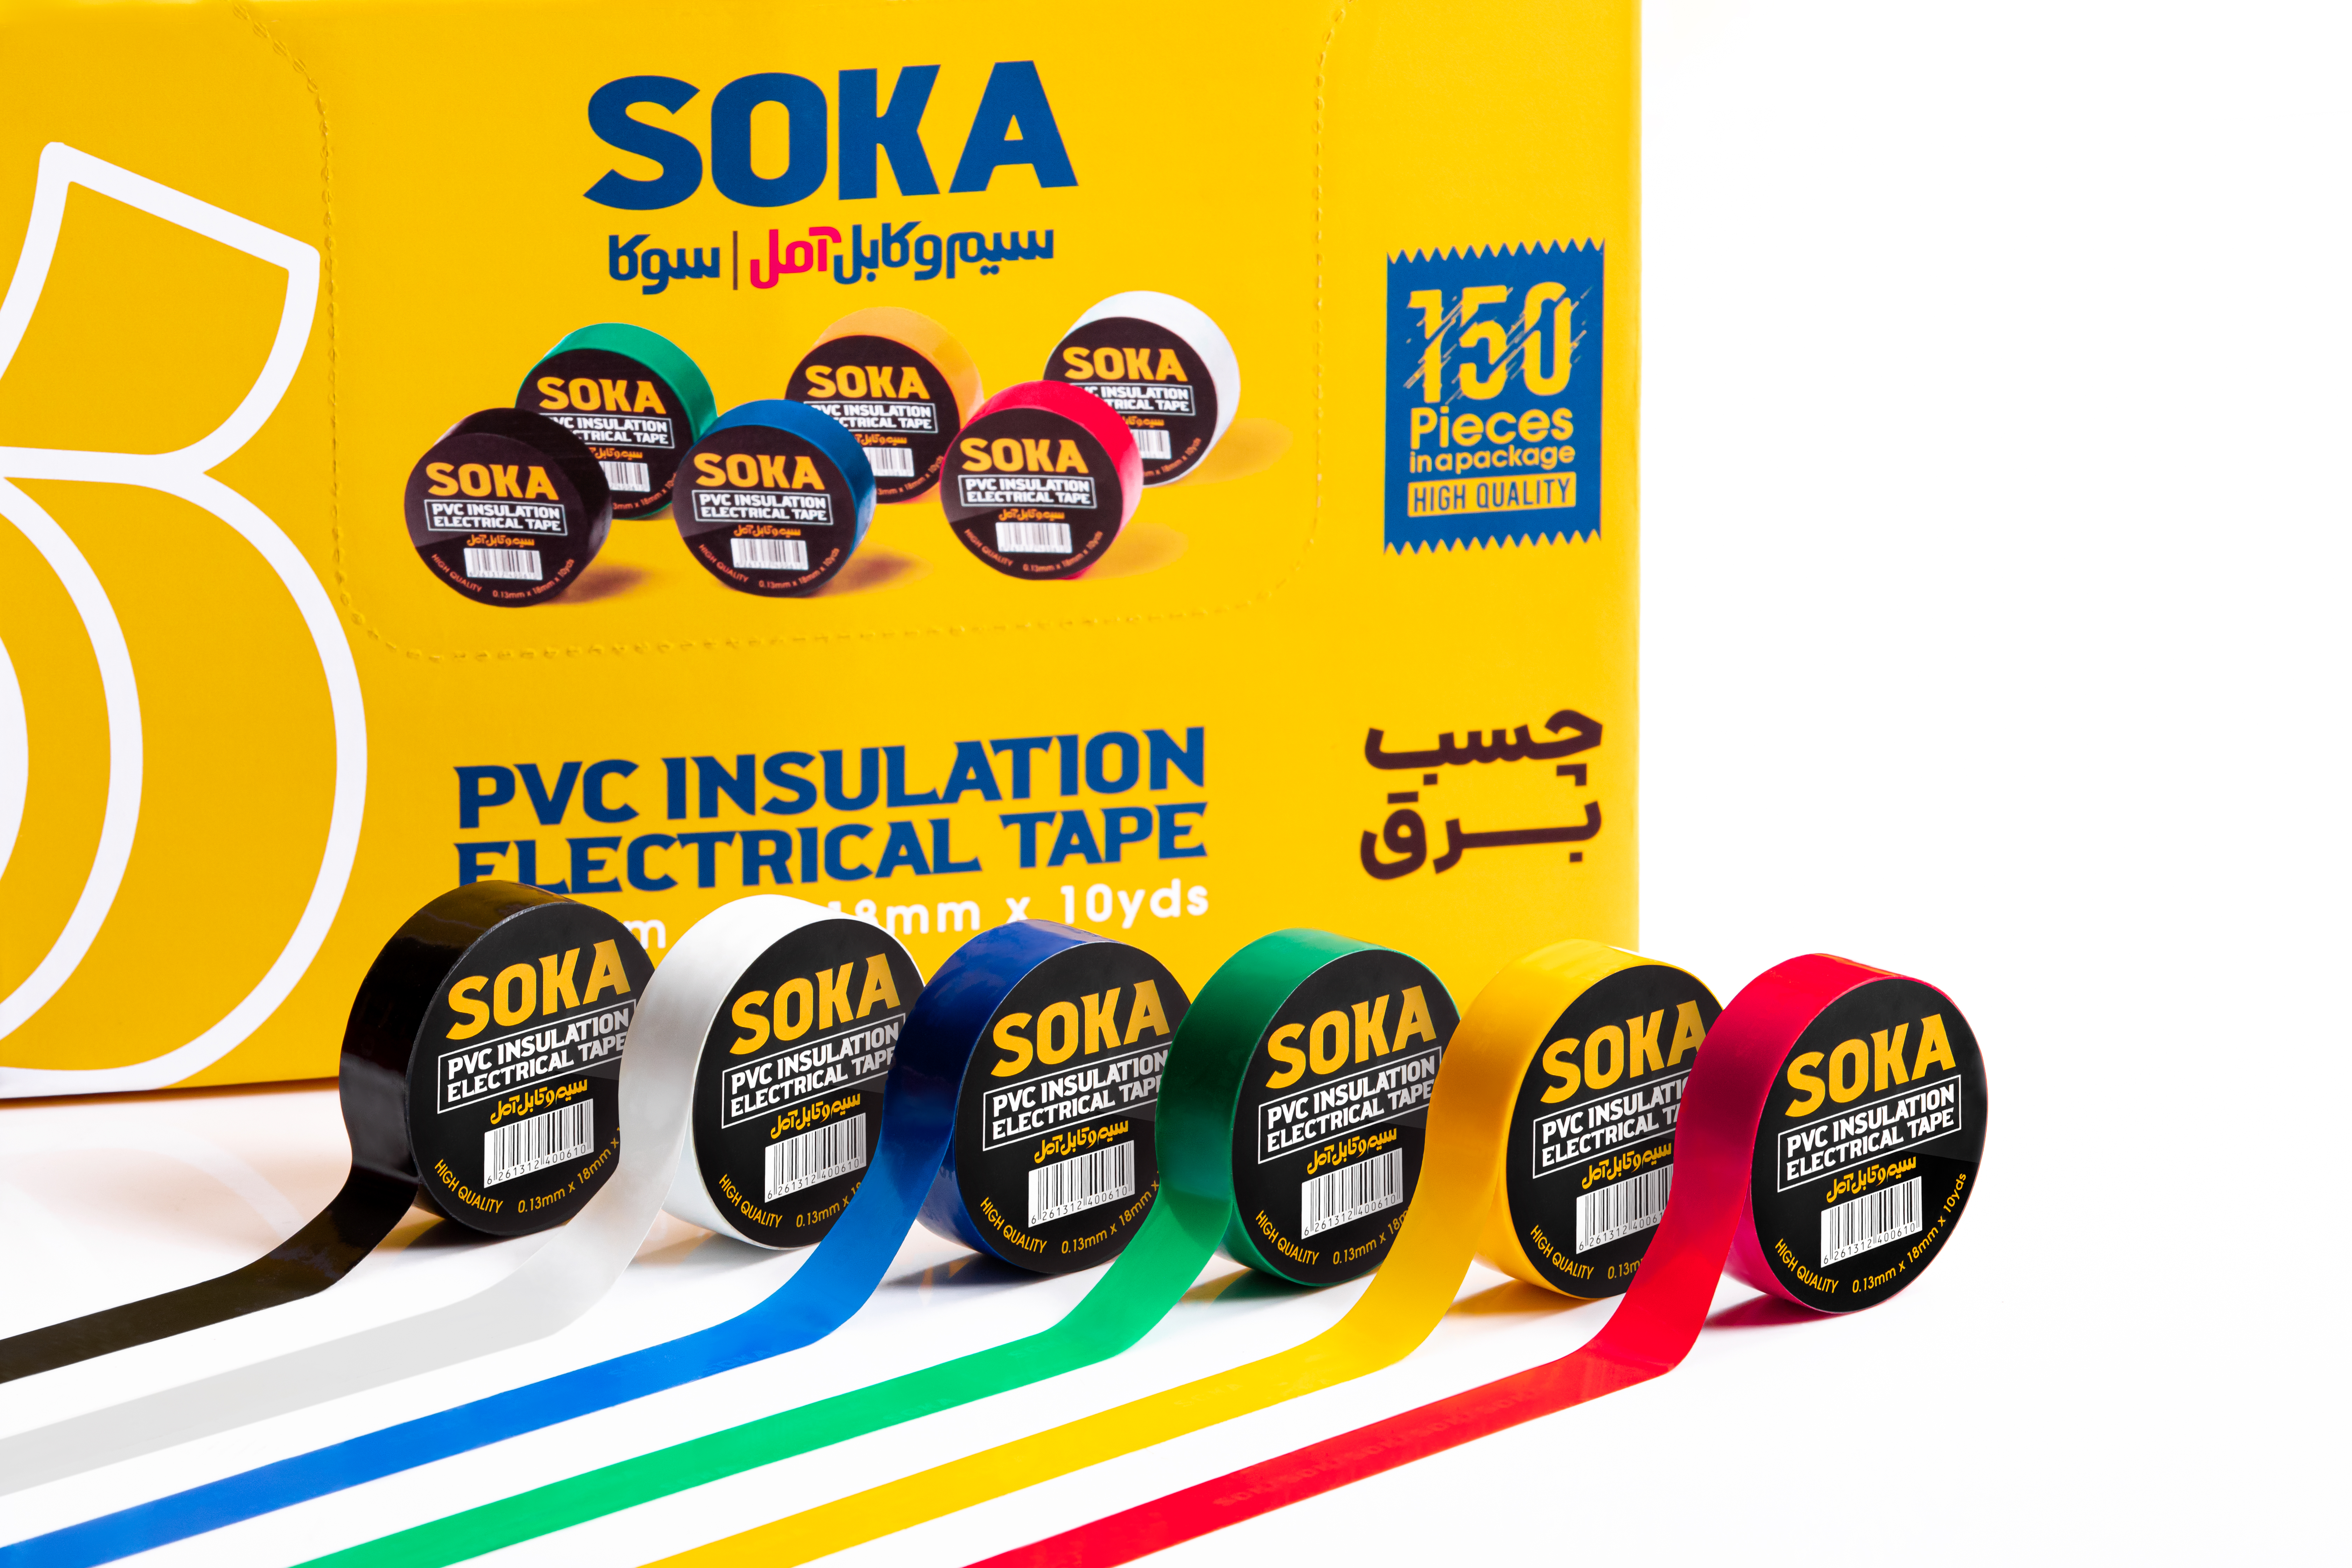                                     New packaging of Soka glue - carton of 150 pieces